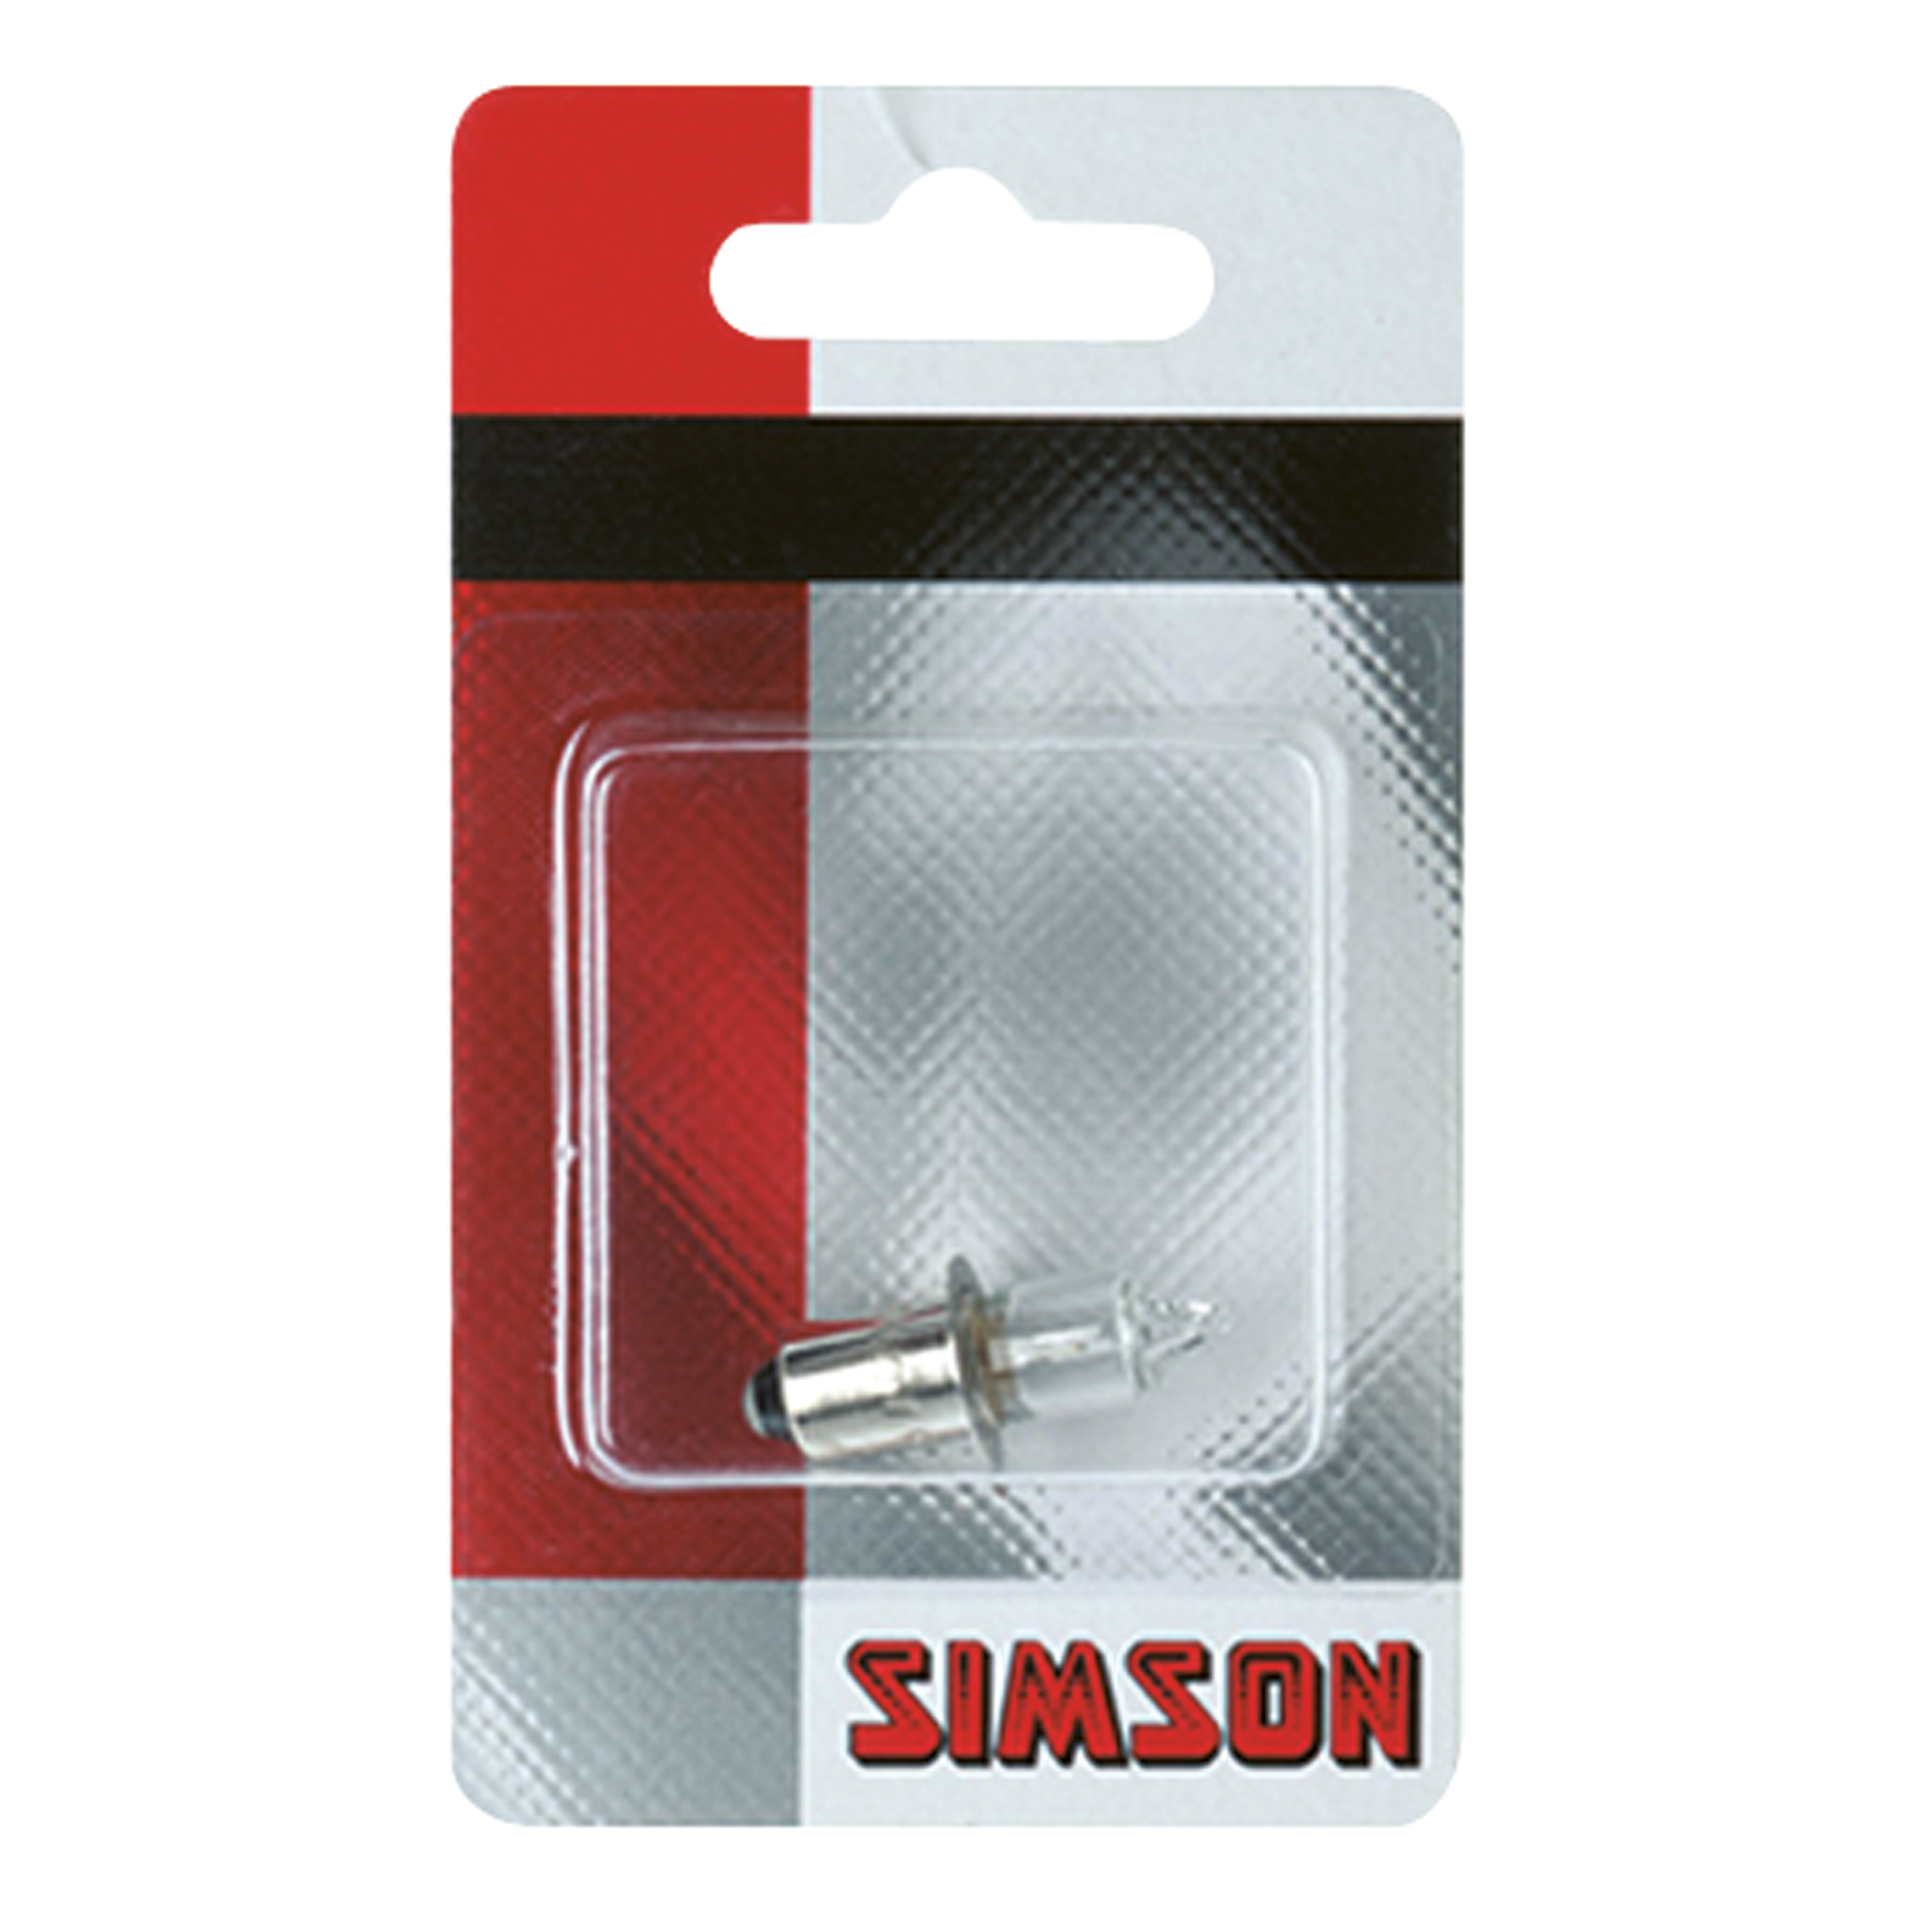 Simson Simson Fietslampje Halogeen 5320656